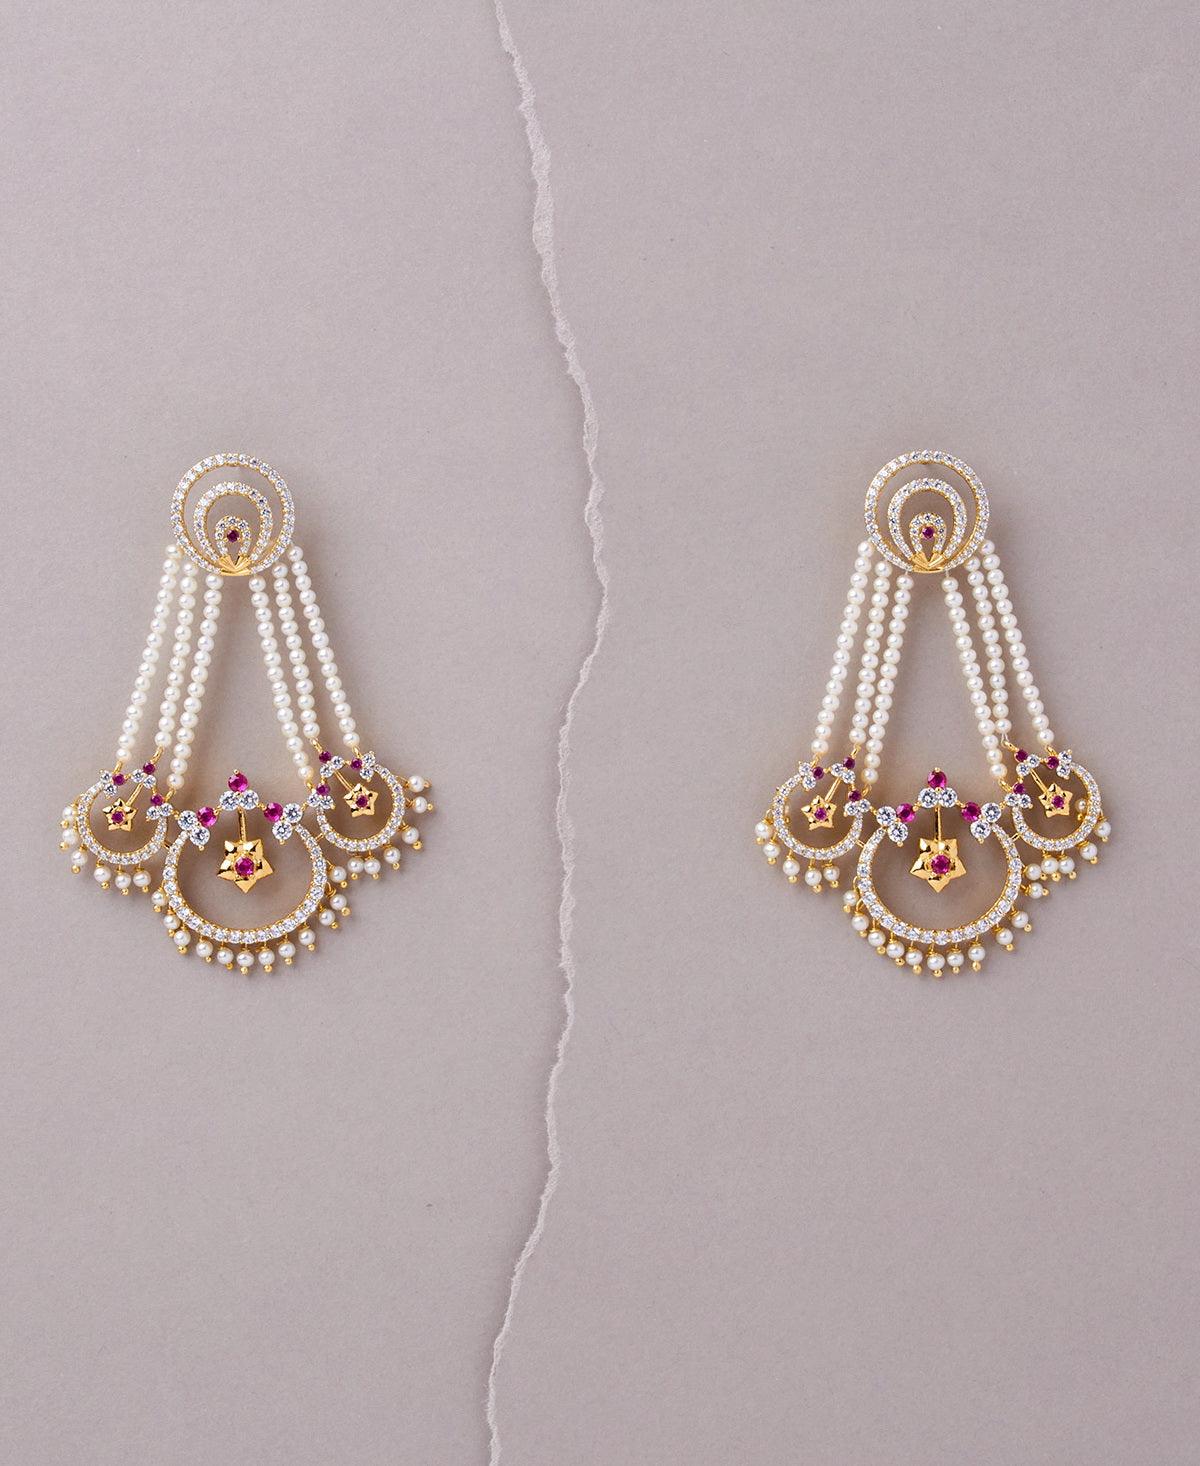 Regal Pearl and Stone Jhumka - Chandrani Pearls